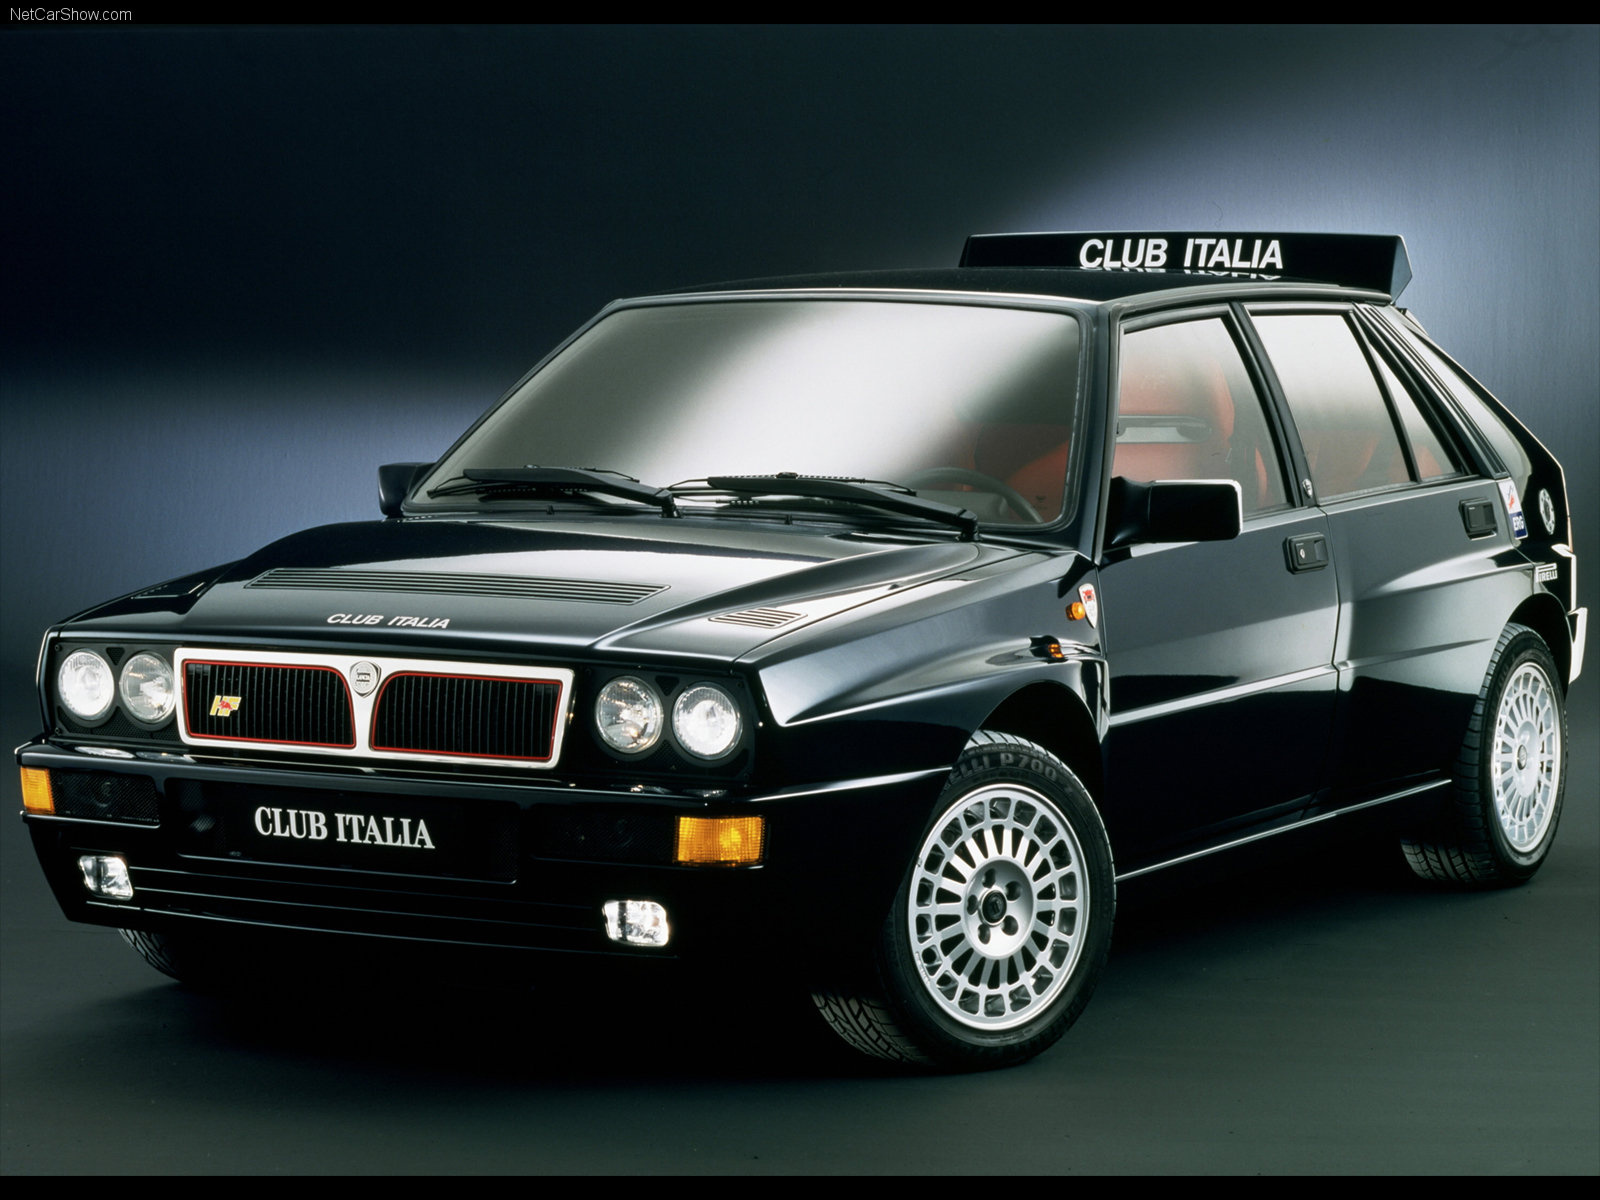 Lancia-Delta Integrale 1992 1600x1200 wallpaper 03